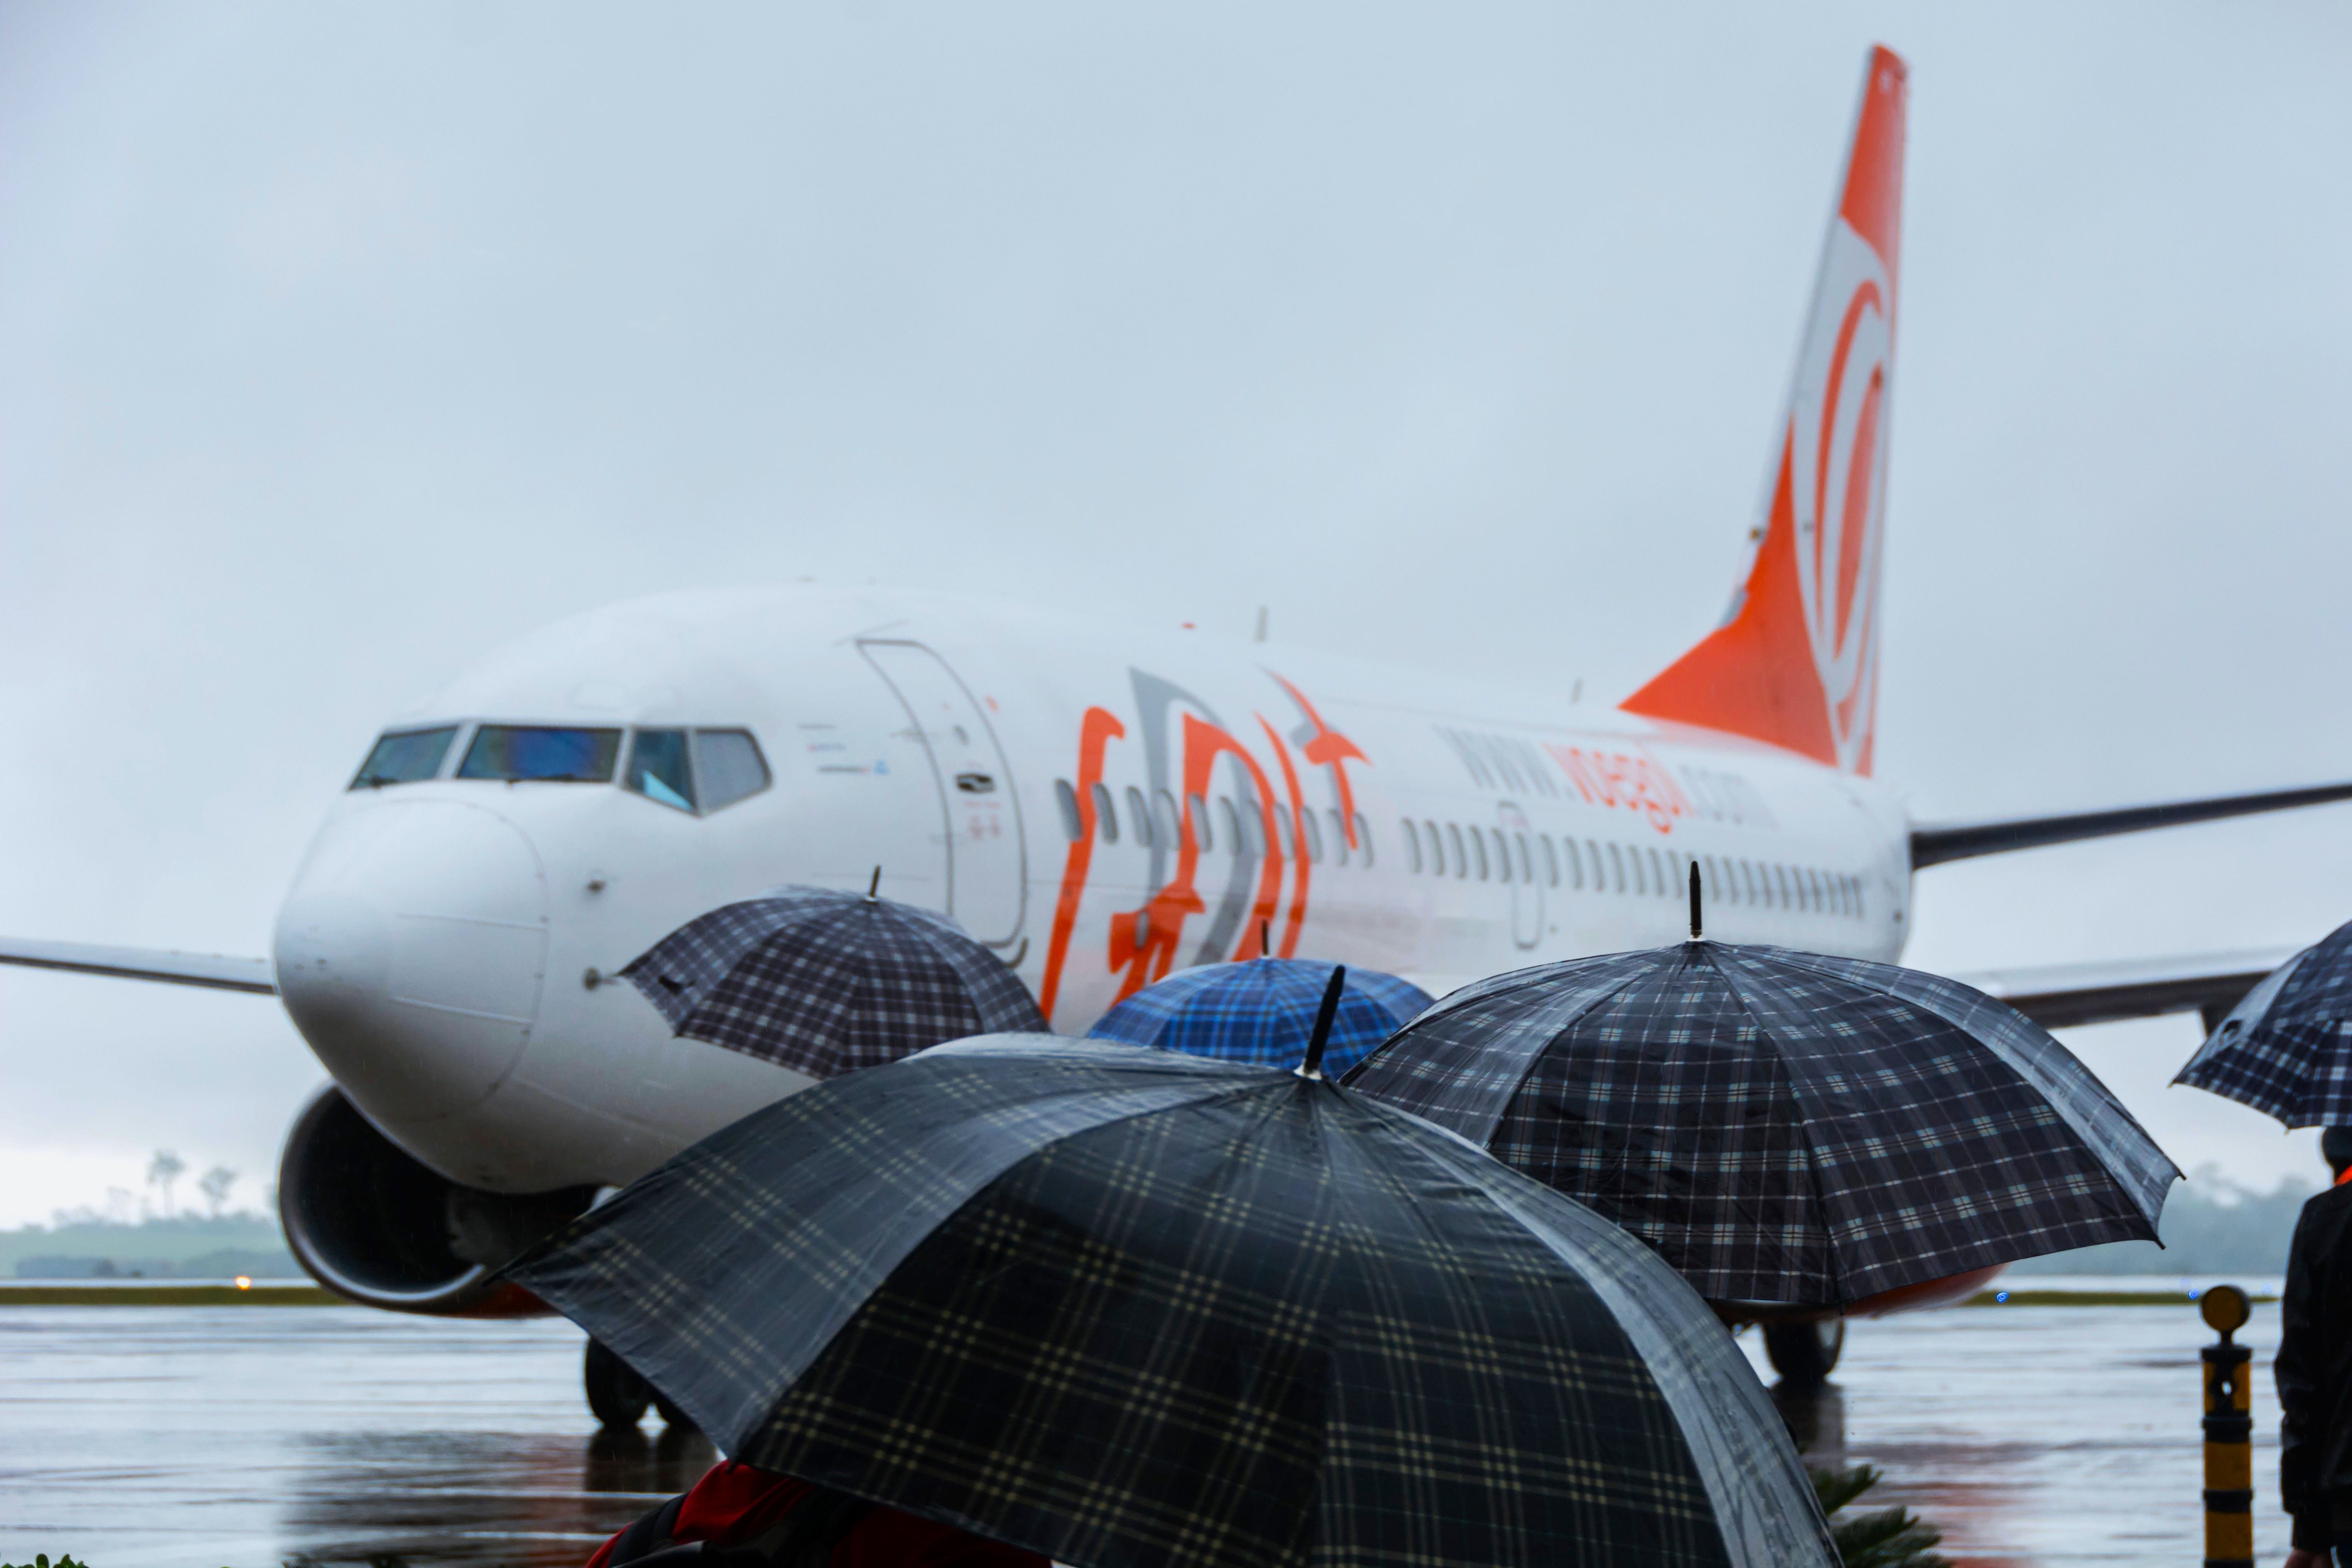 shutterstock_1869465385 - Foz do Iguaçu, Paraná - Brazil - August 20, 2016: Passengers boarding with umbrellas on a rainy day at Foz do Iguaçu airport. Gol Airlines airplane in the terminal.